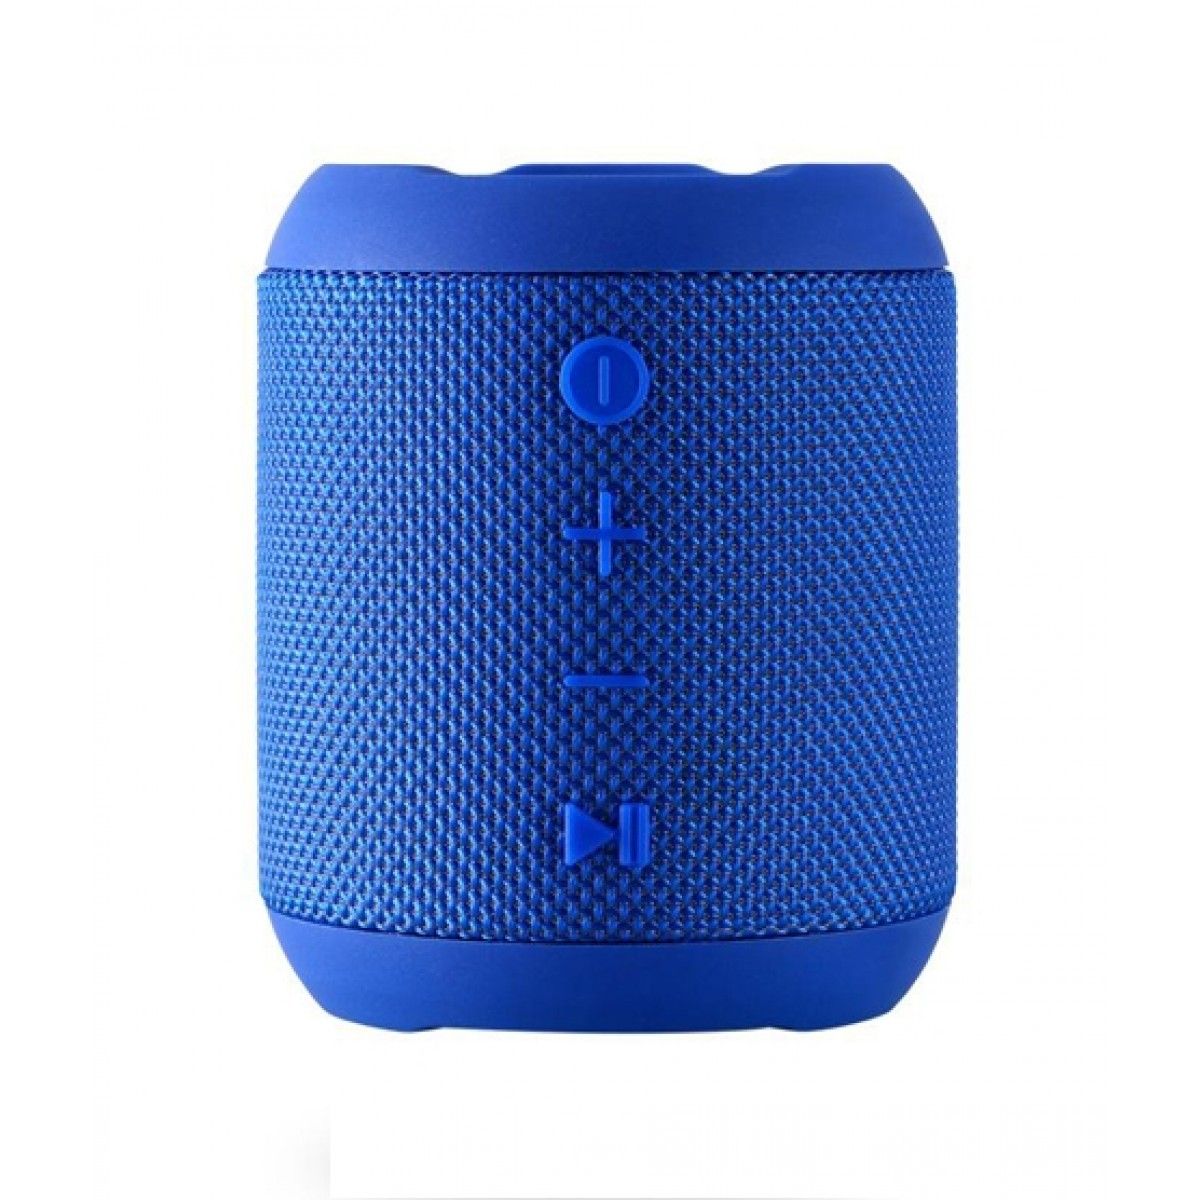 Remax Portable Bluetooth Speaker M21